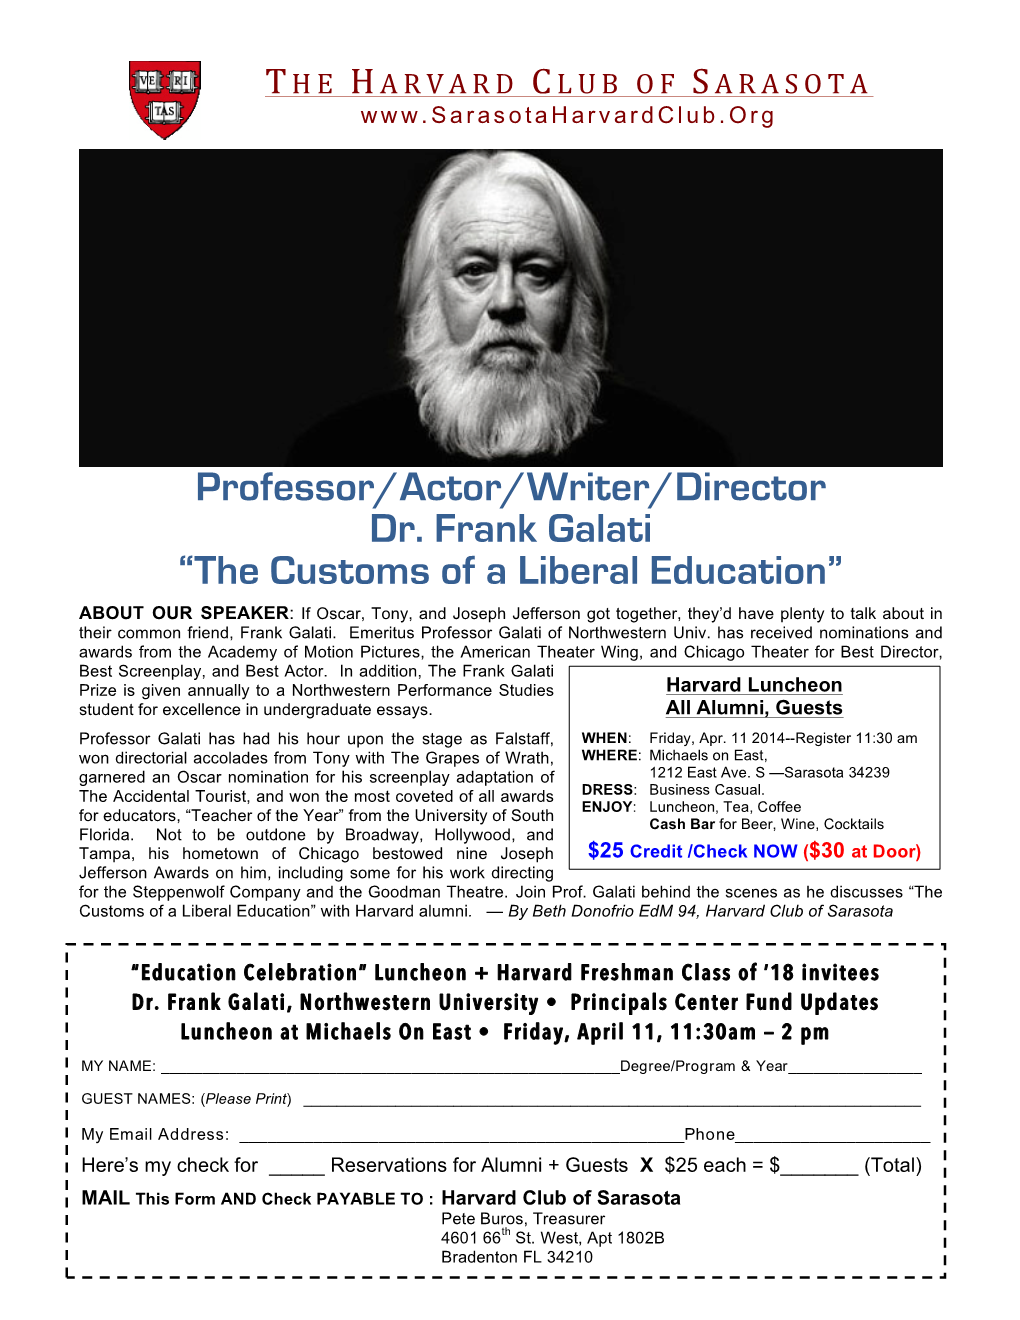 Professor/Actor/Writer/Director Dr. Frank Galati